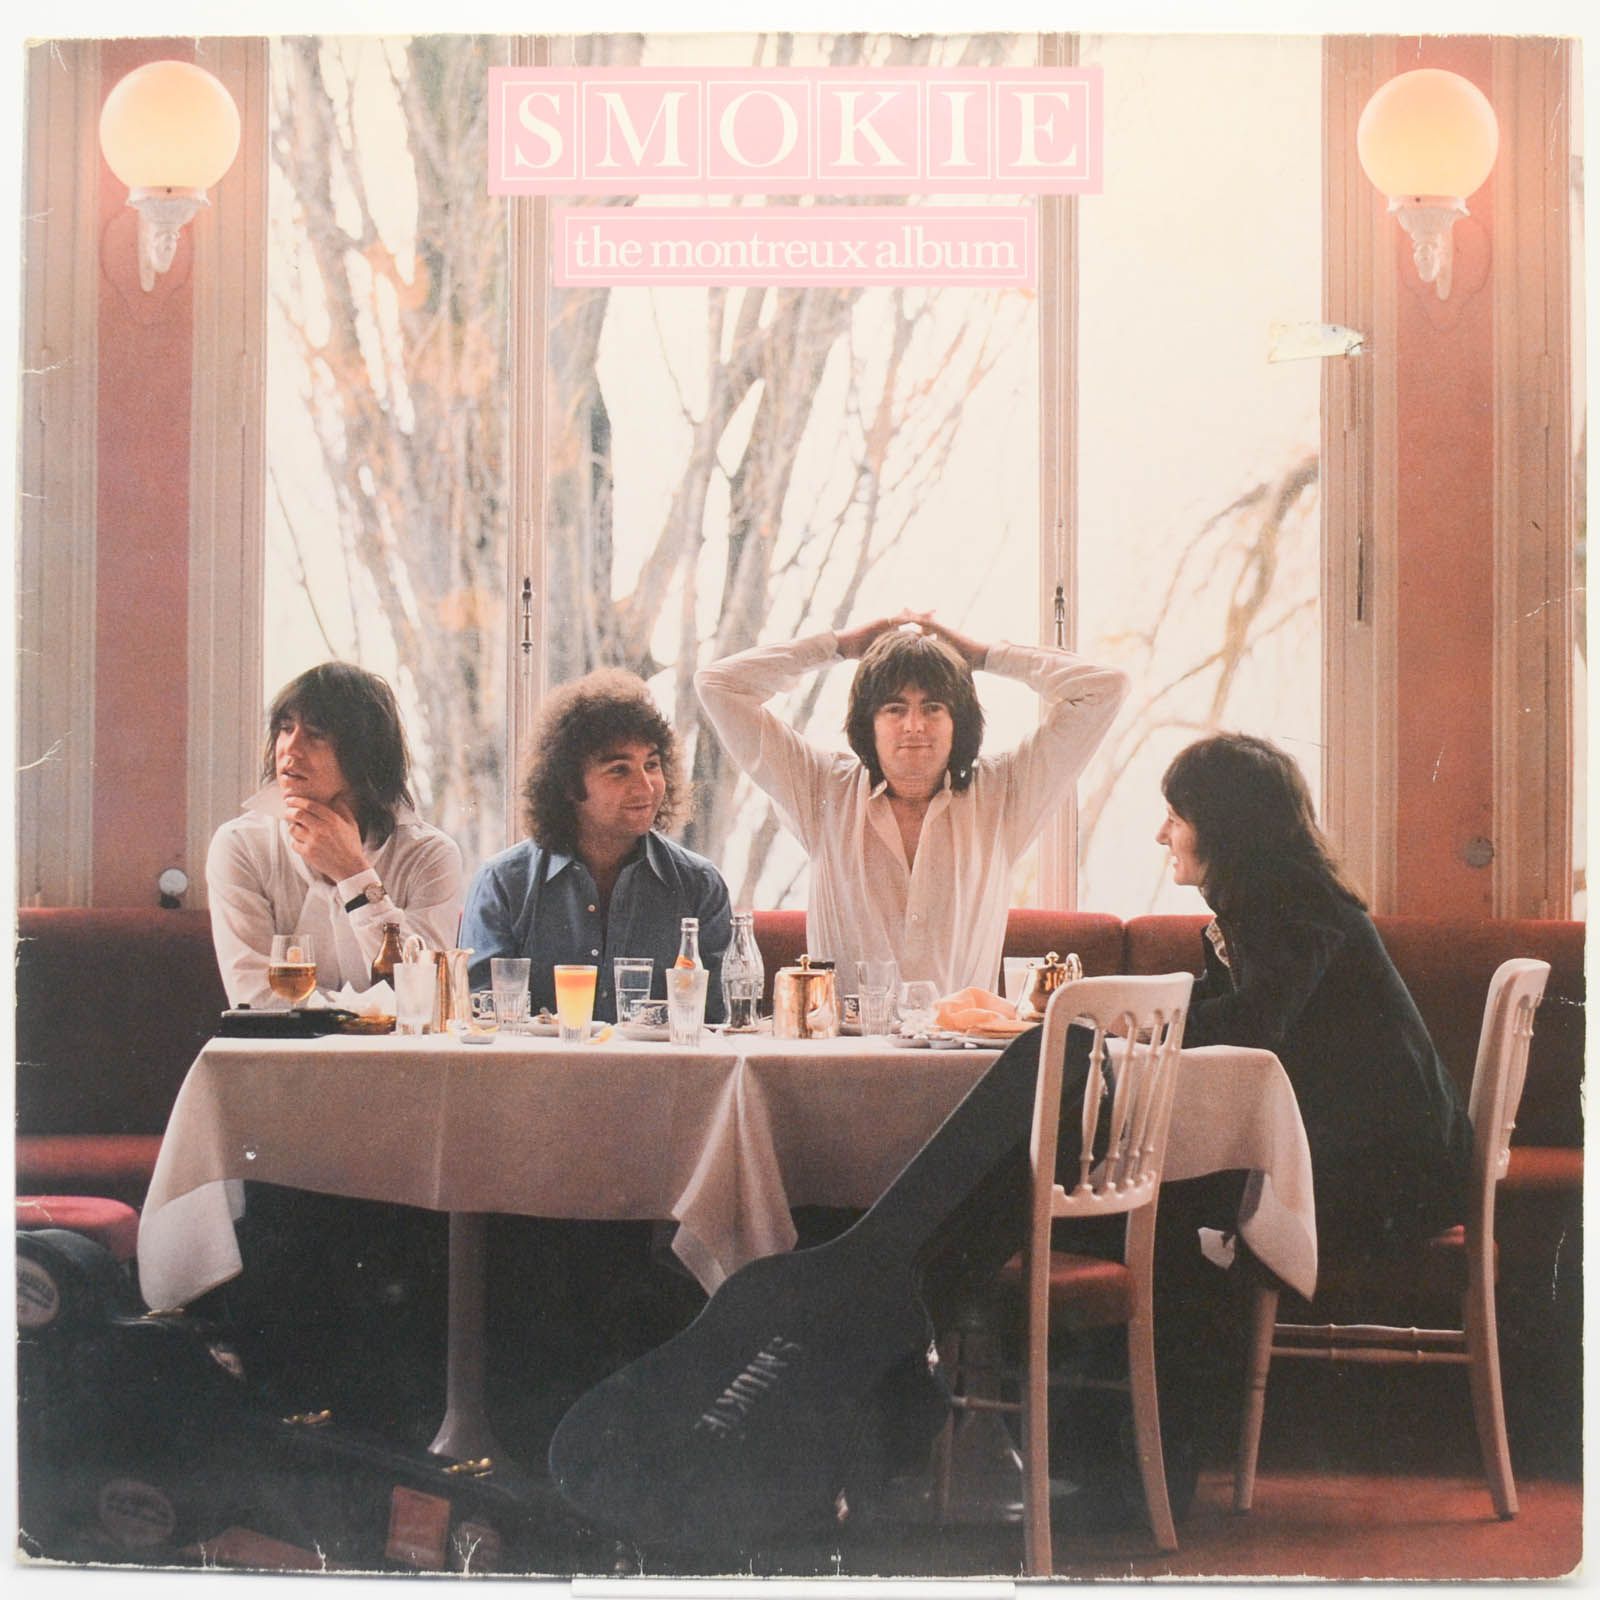 Smokie — The Montreux Album, 1978